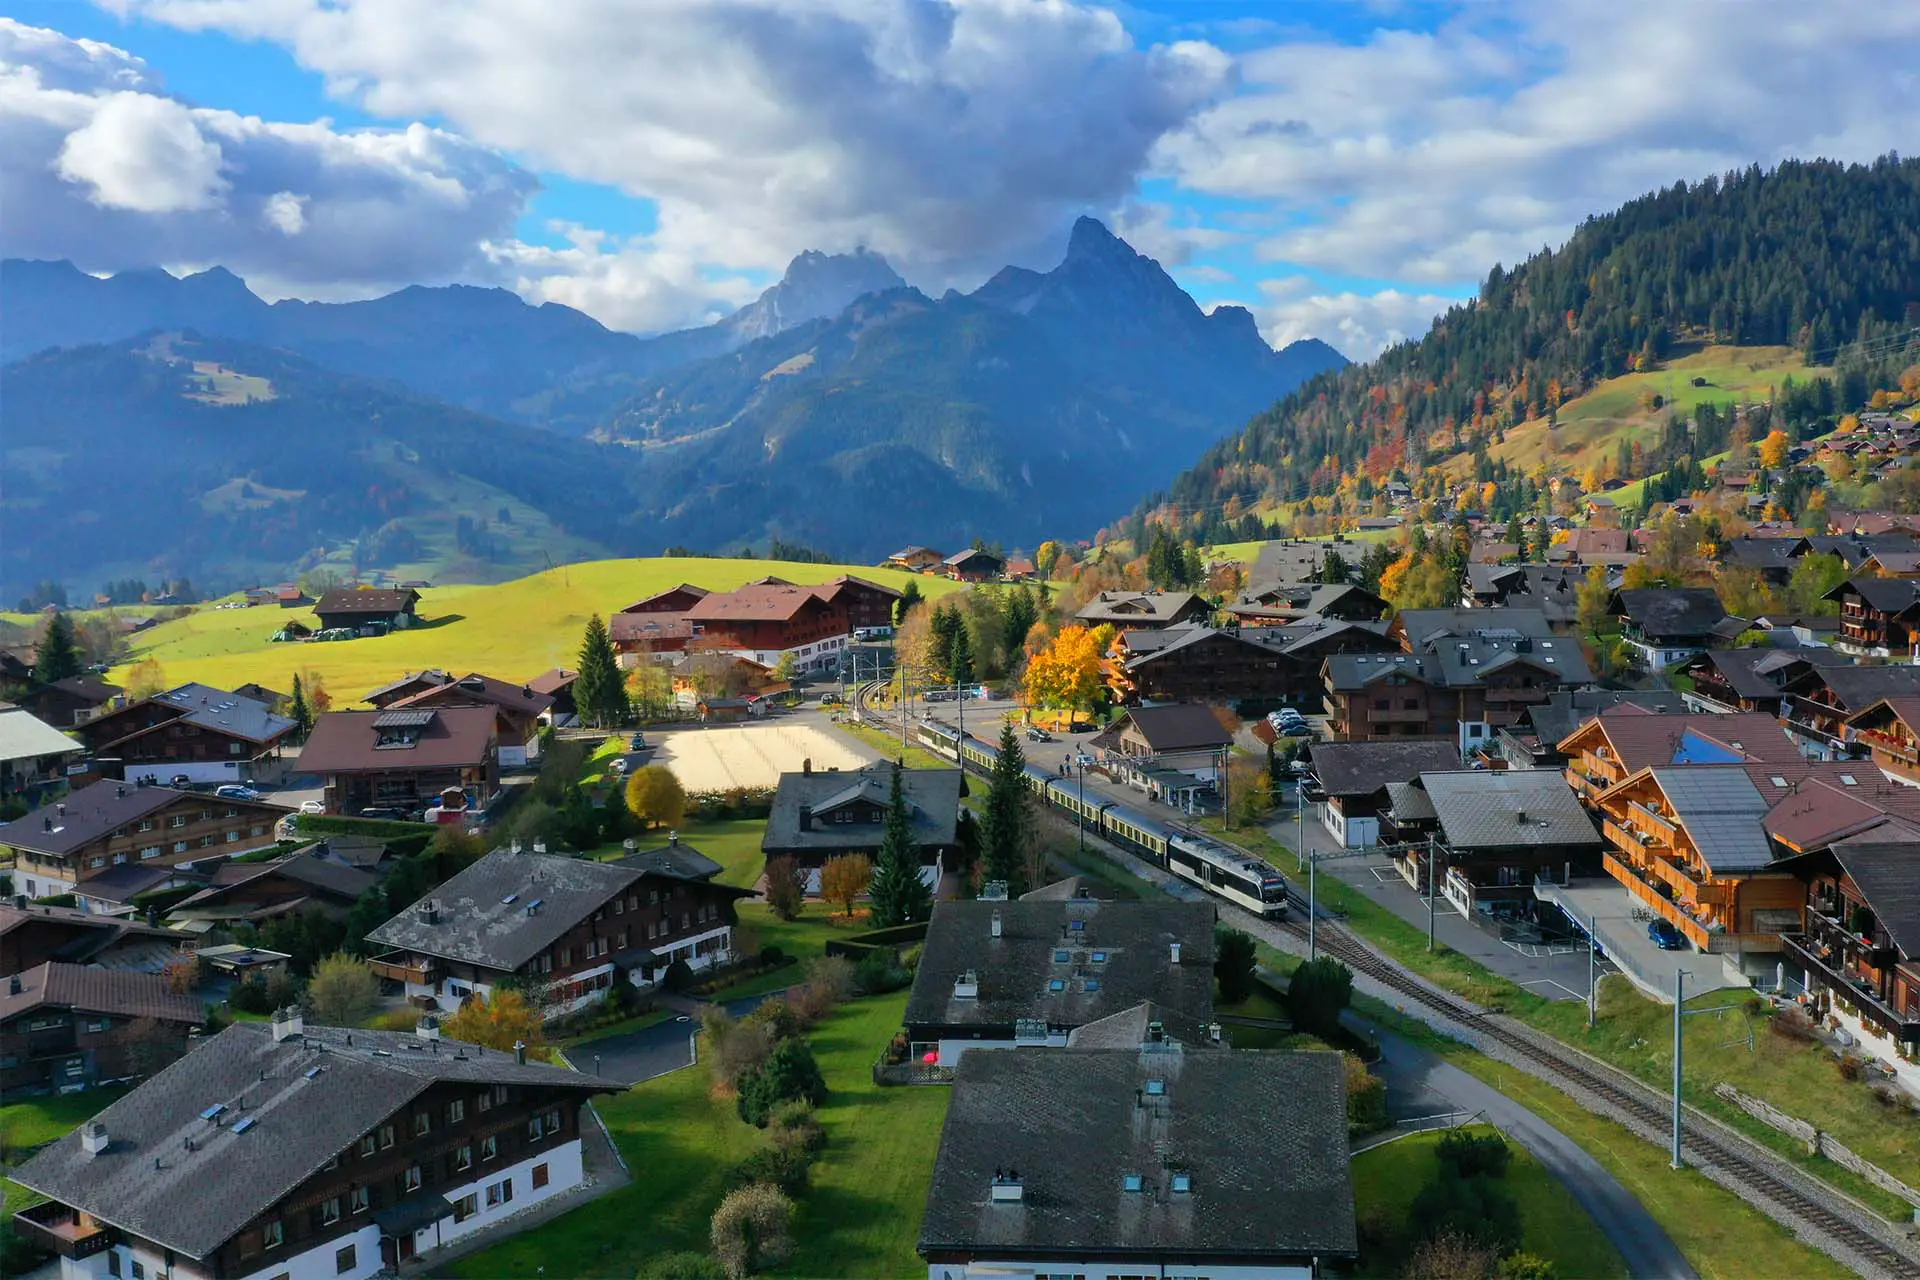 The idyllic scenery of Gstaad in Switzerland.